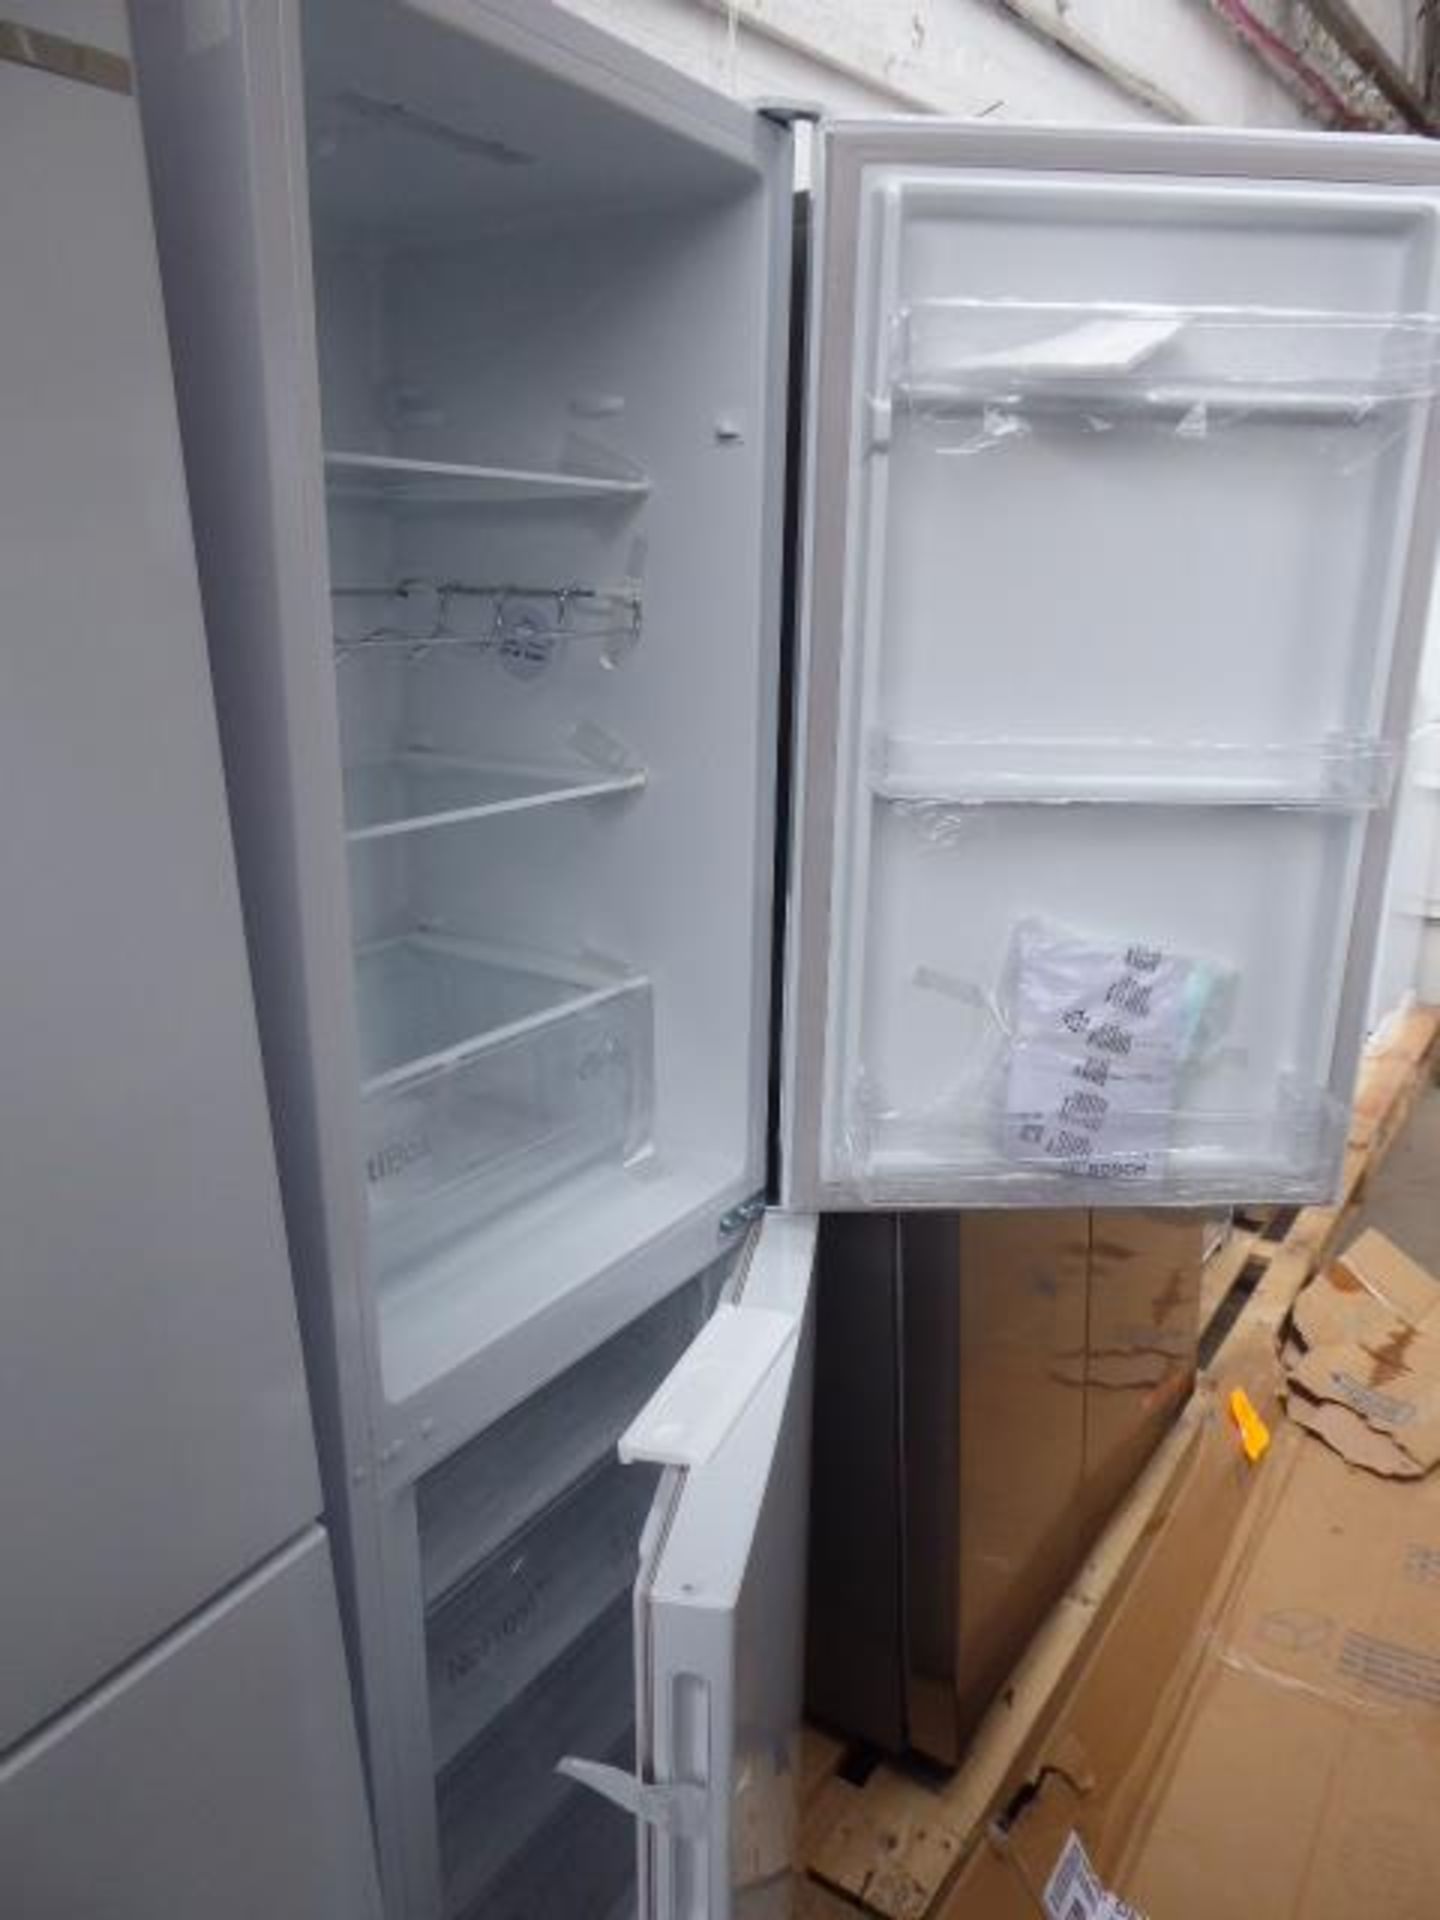 KGN27NWFAGB Bosch Free-standing fridge-freezer - Image 2 of 2